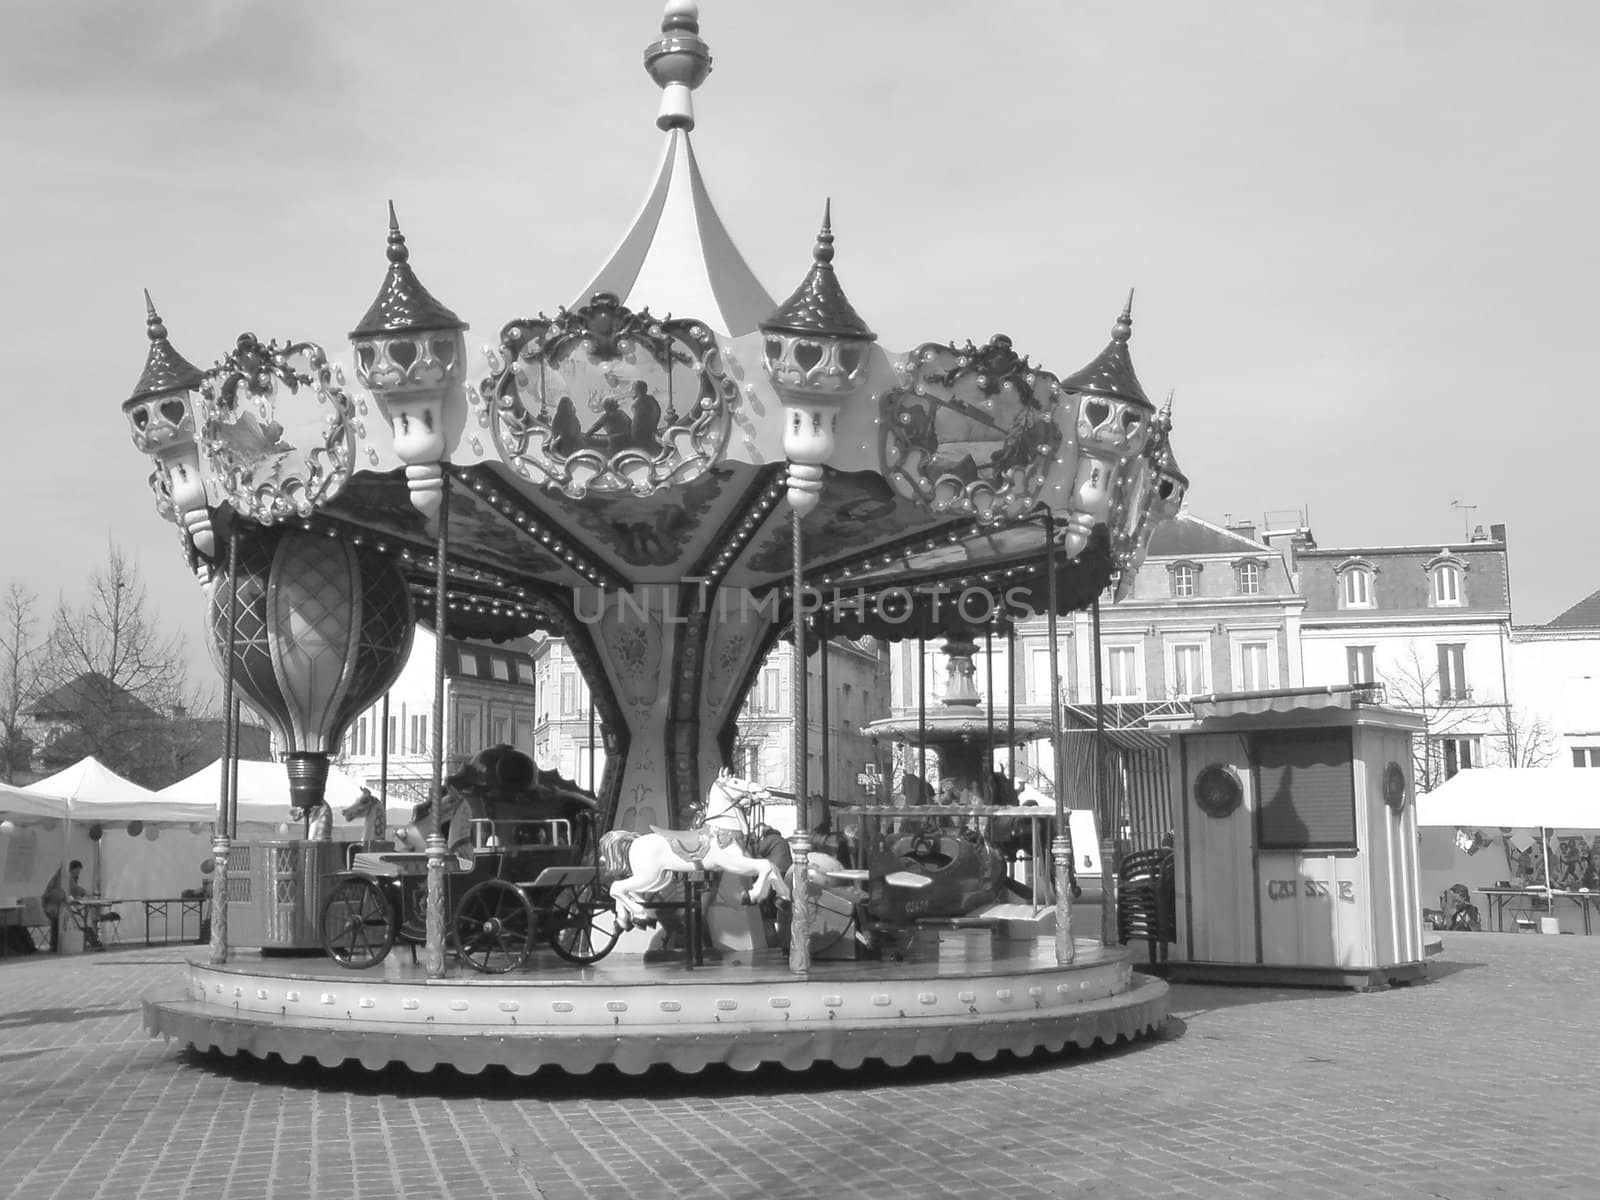 Merry-go-round (carousel) by chrisga